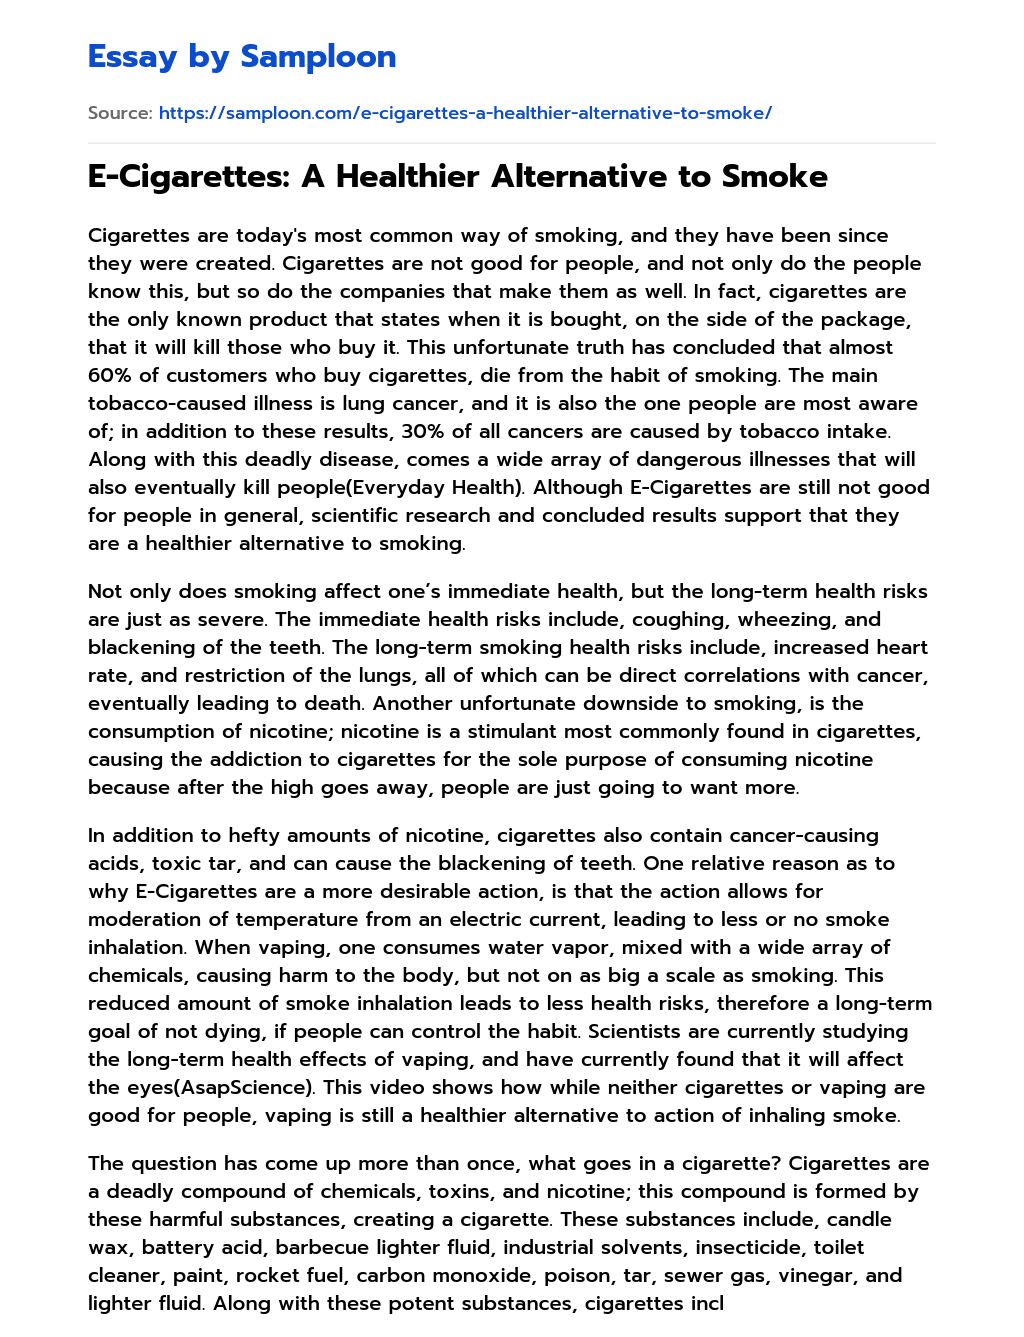 E-Cigarettes: A Healthier Alternative to Smoke essay